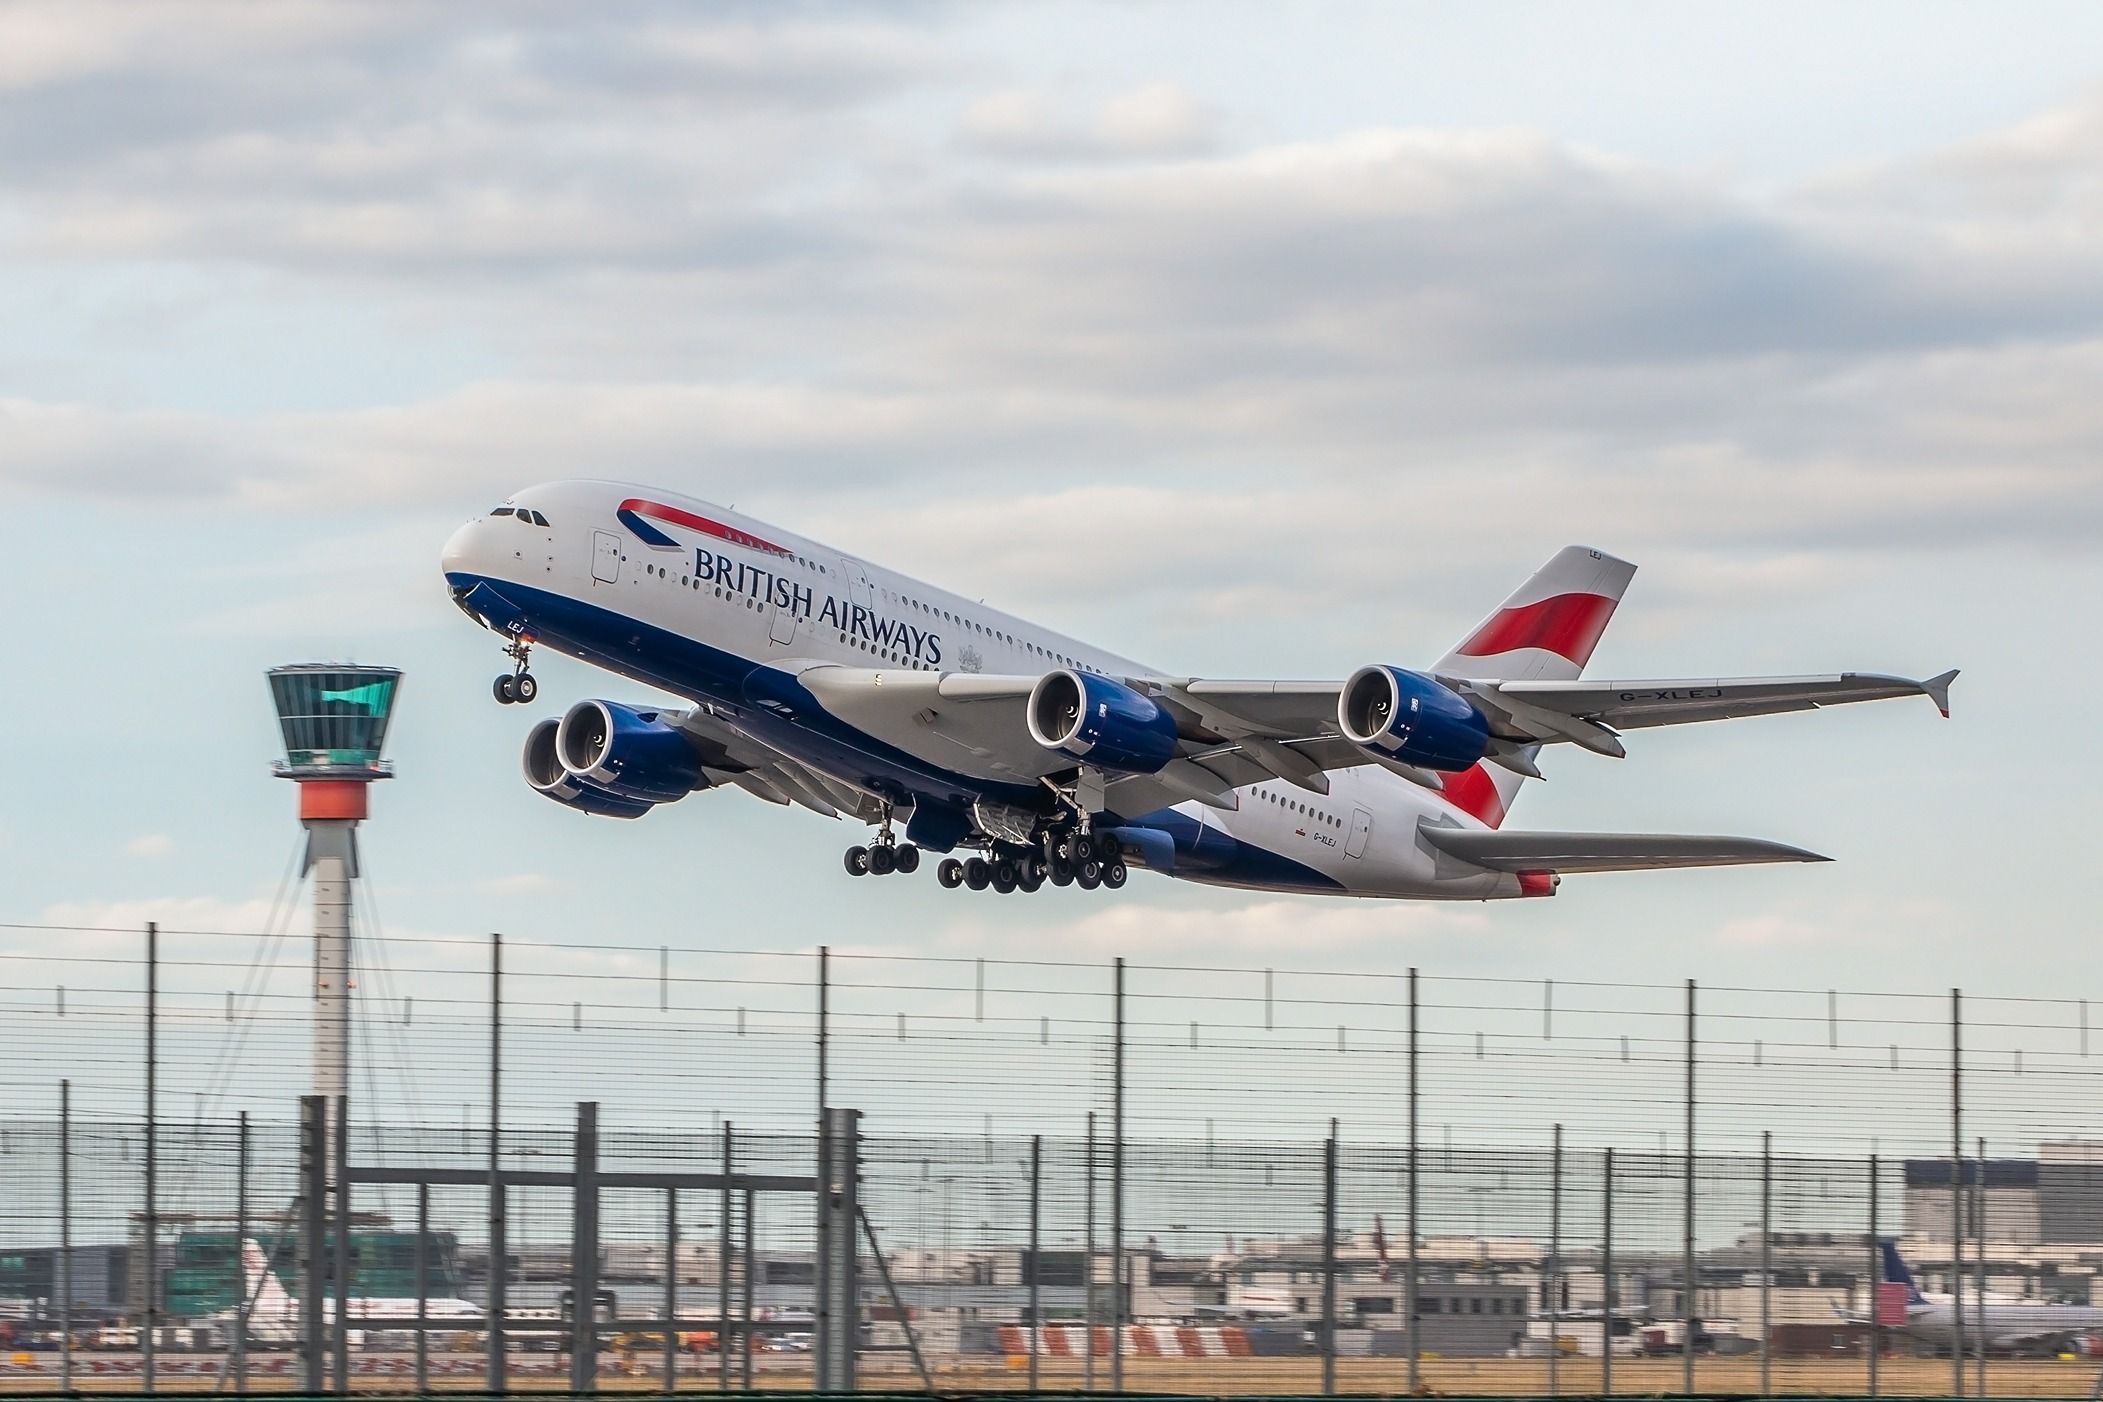 British Airways Airbus A380 departing